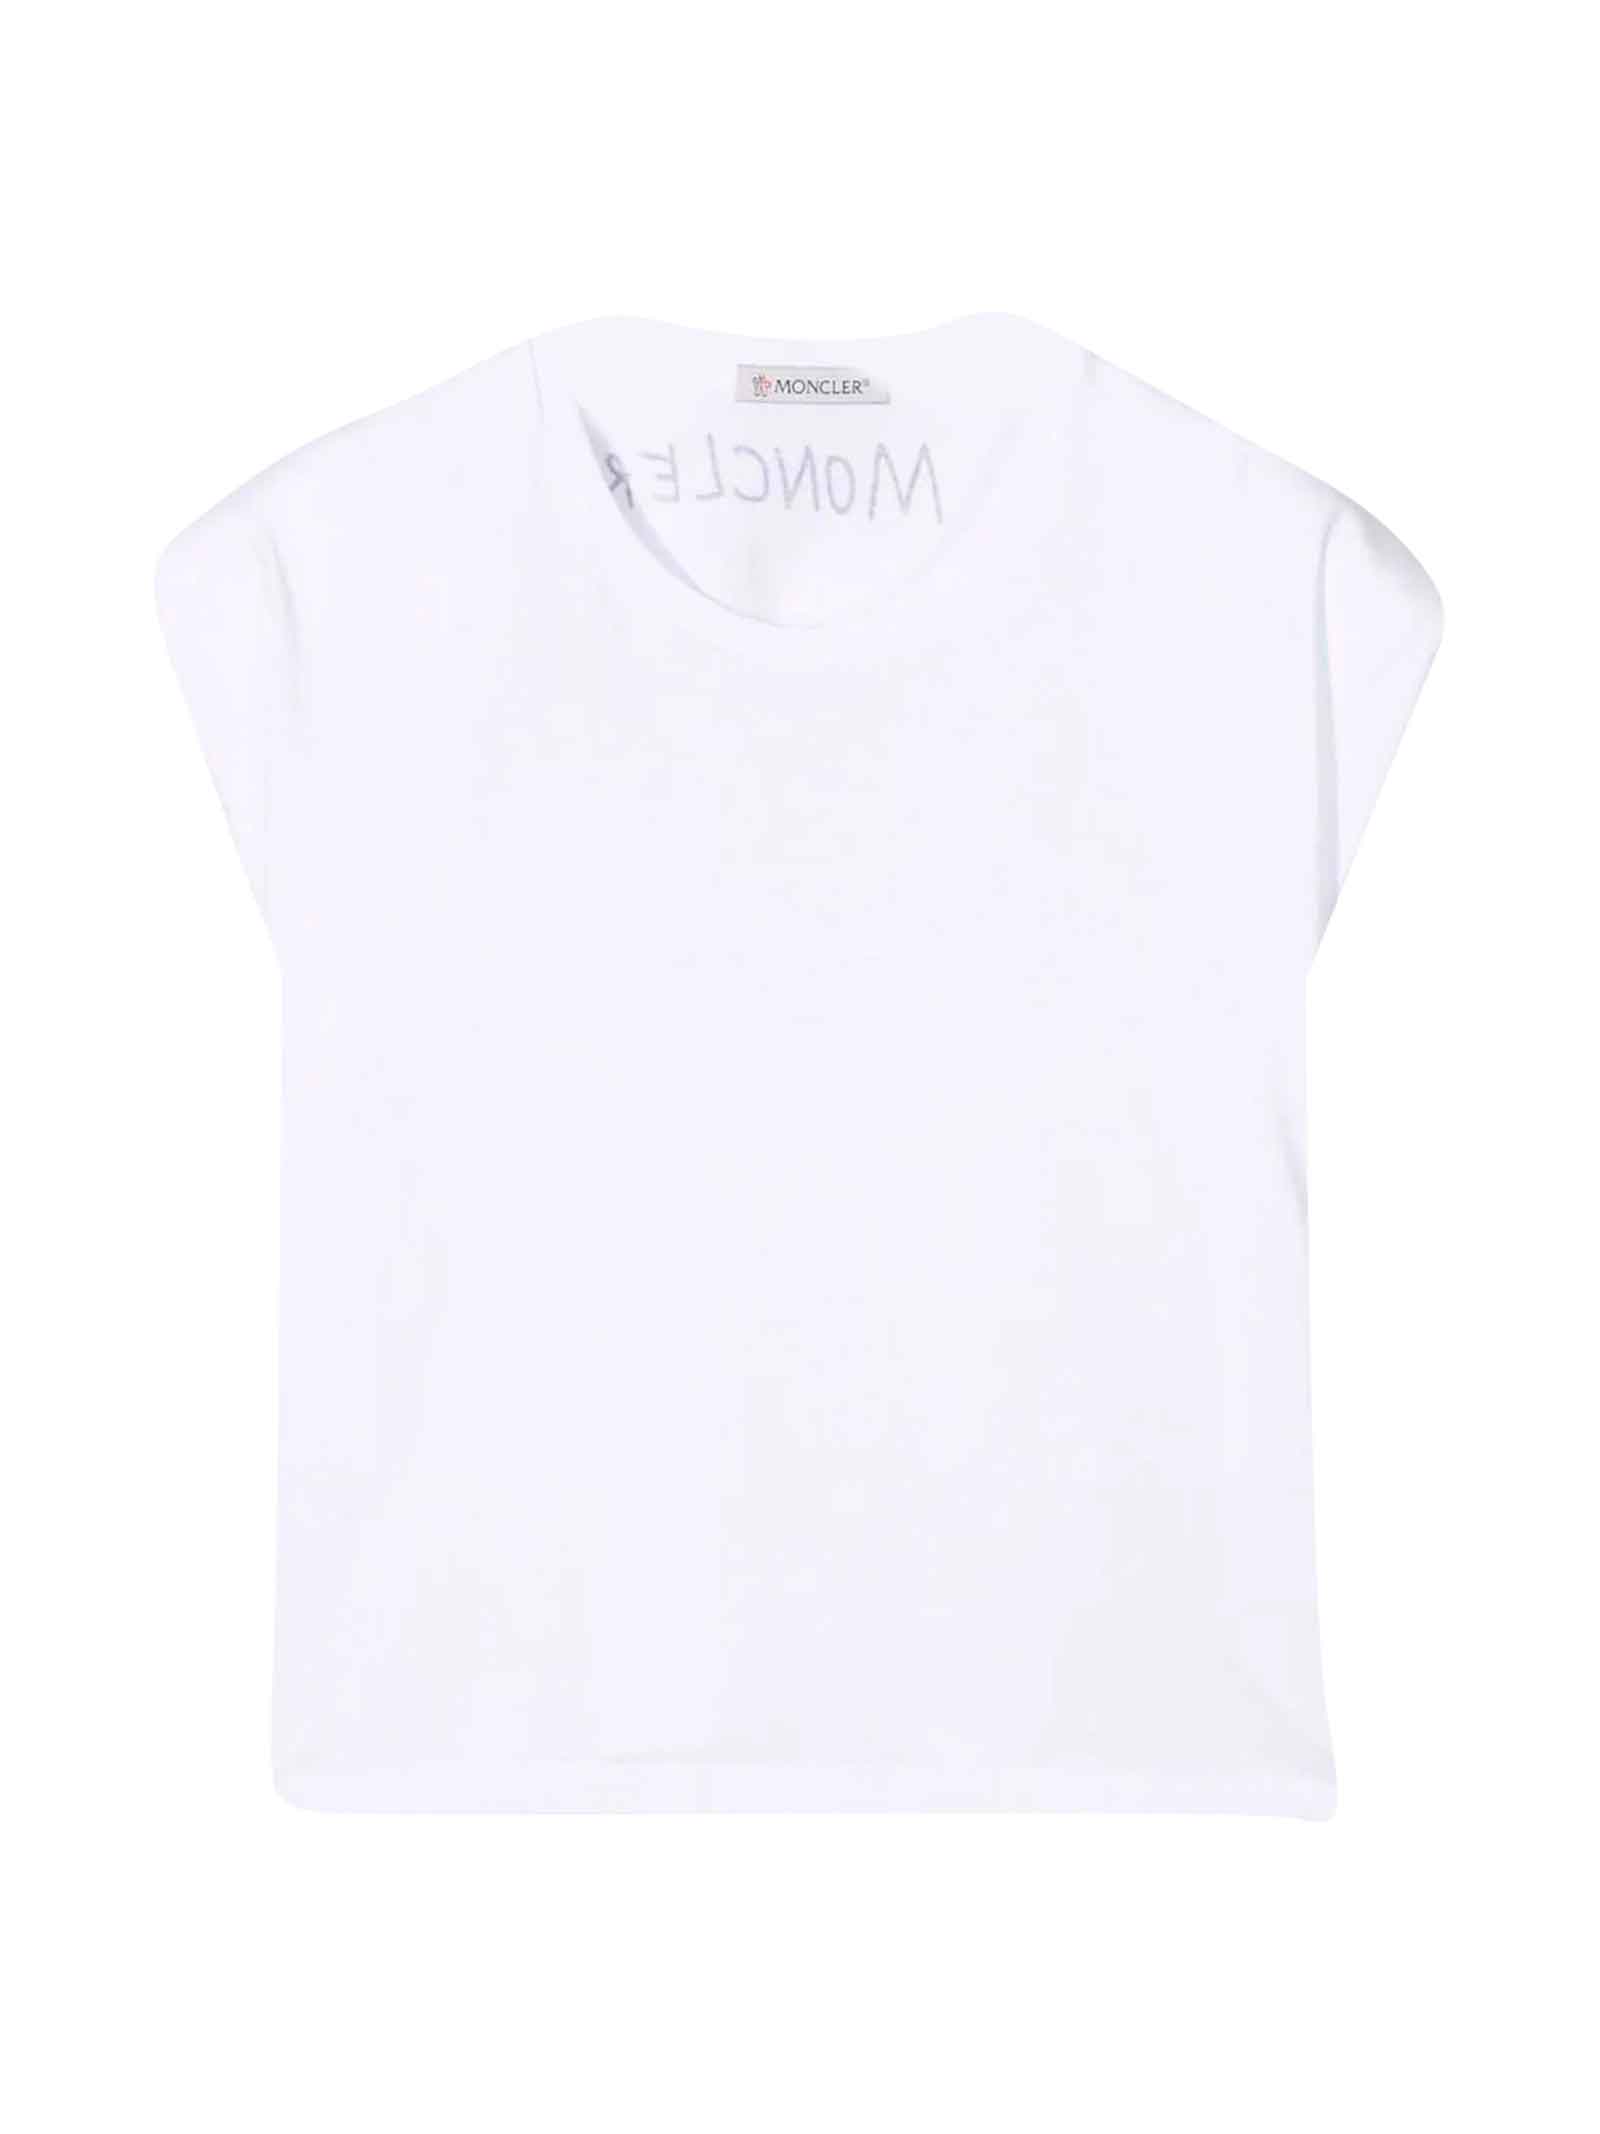 Moncler Unisex White T-shirt